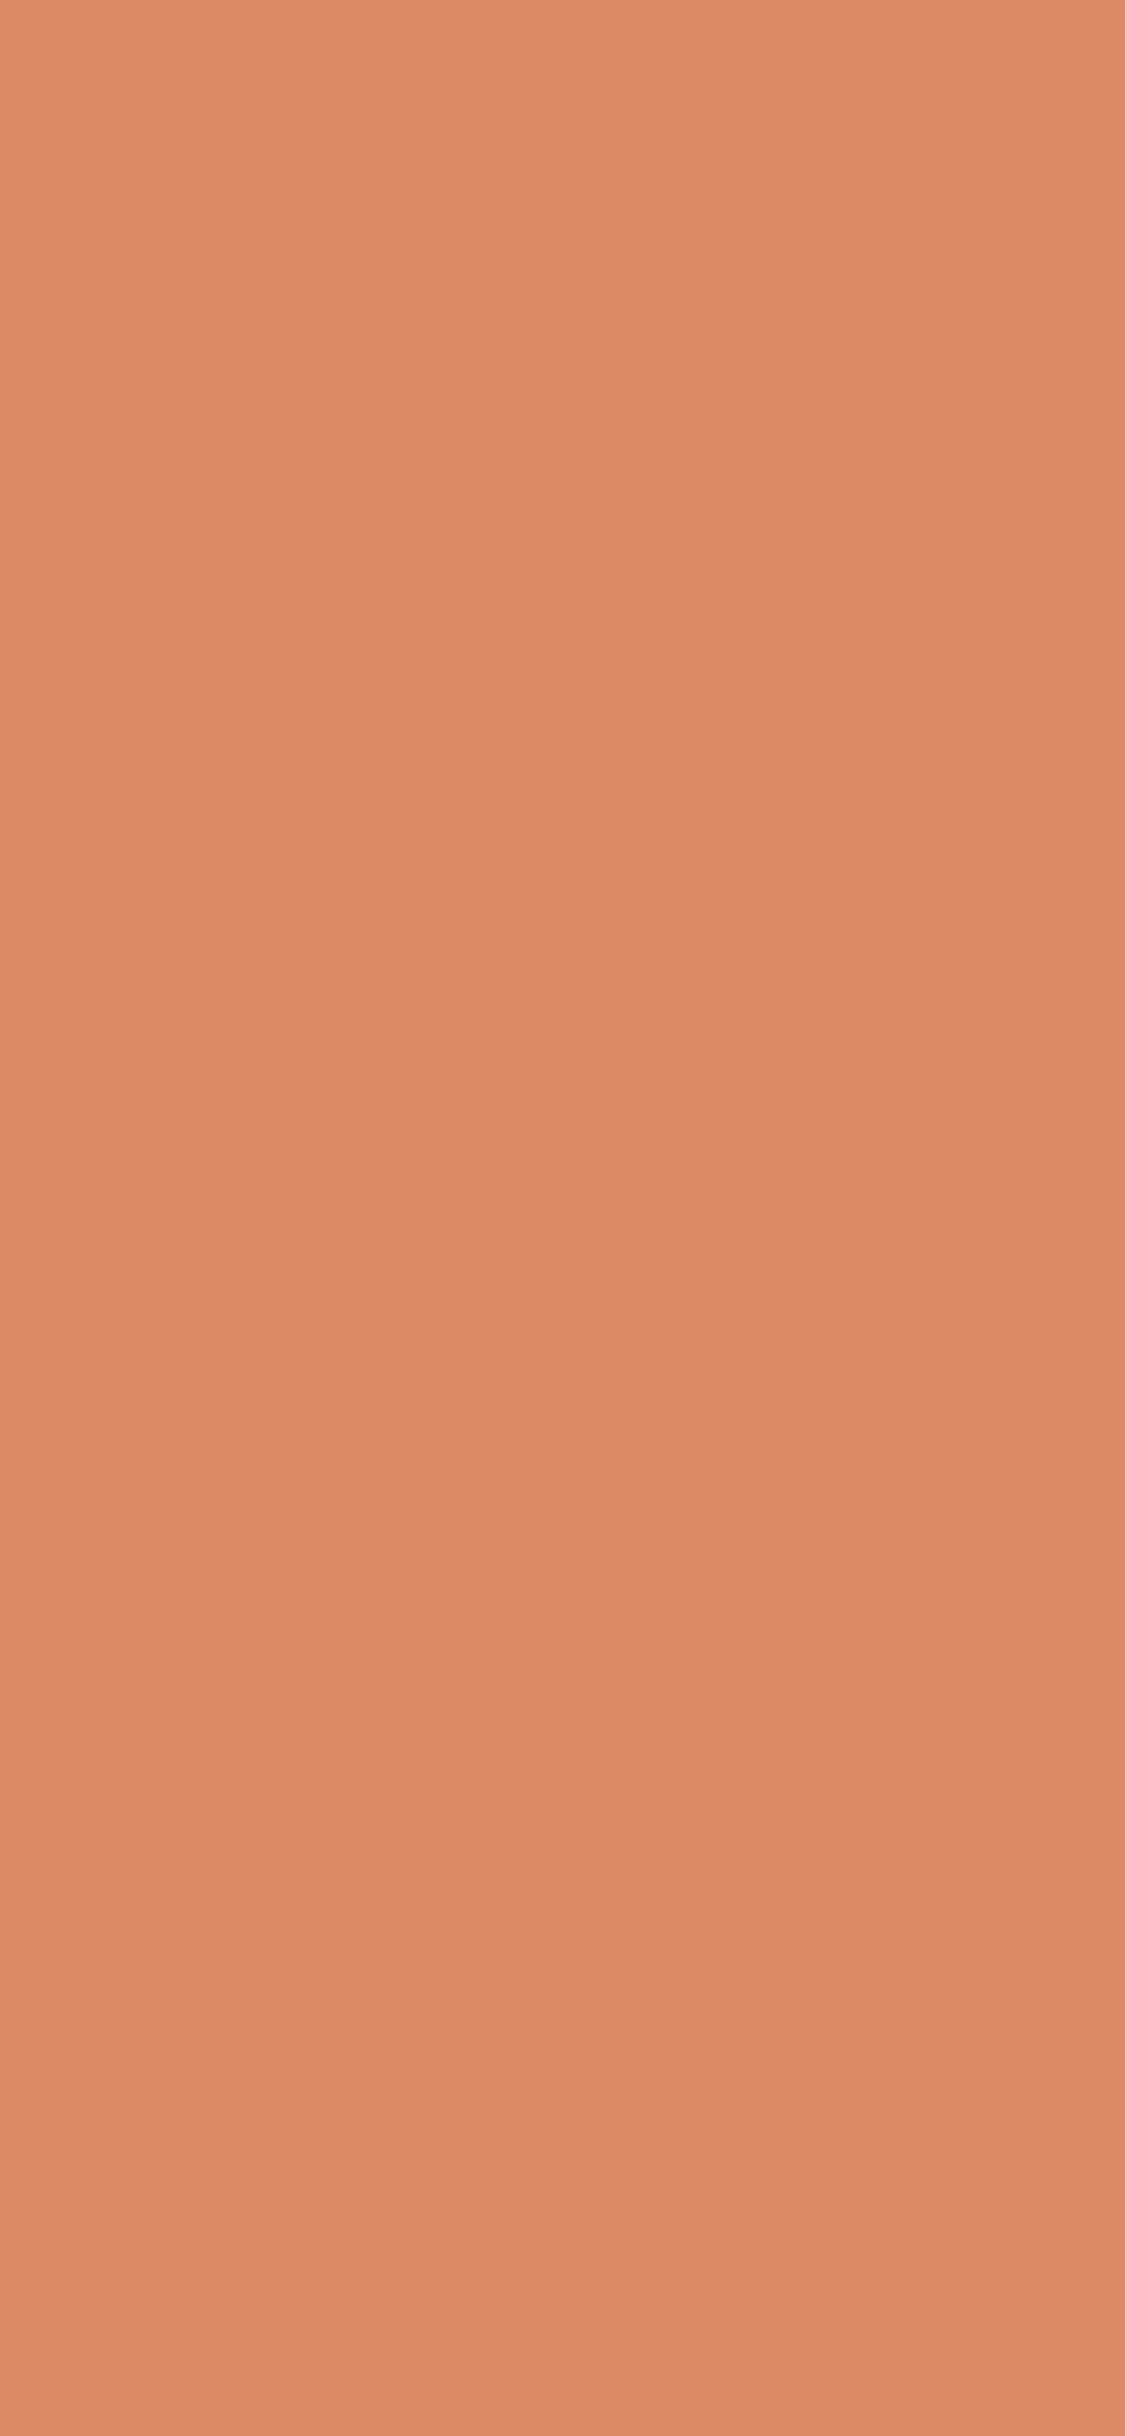 1125x2436 Copper Crayola Solid Color Background